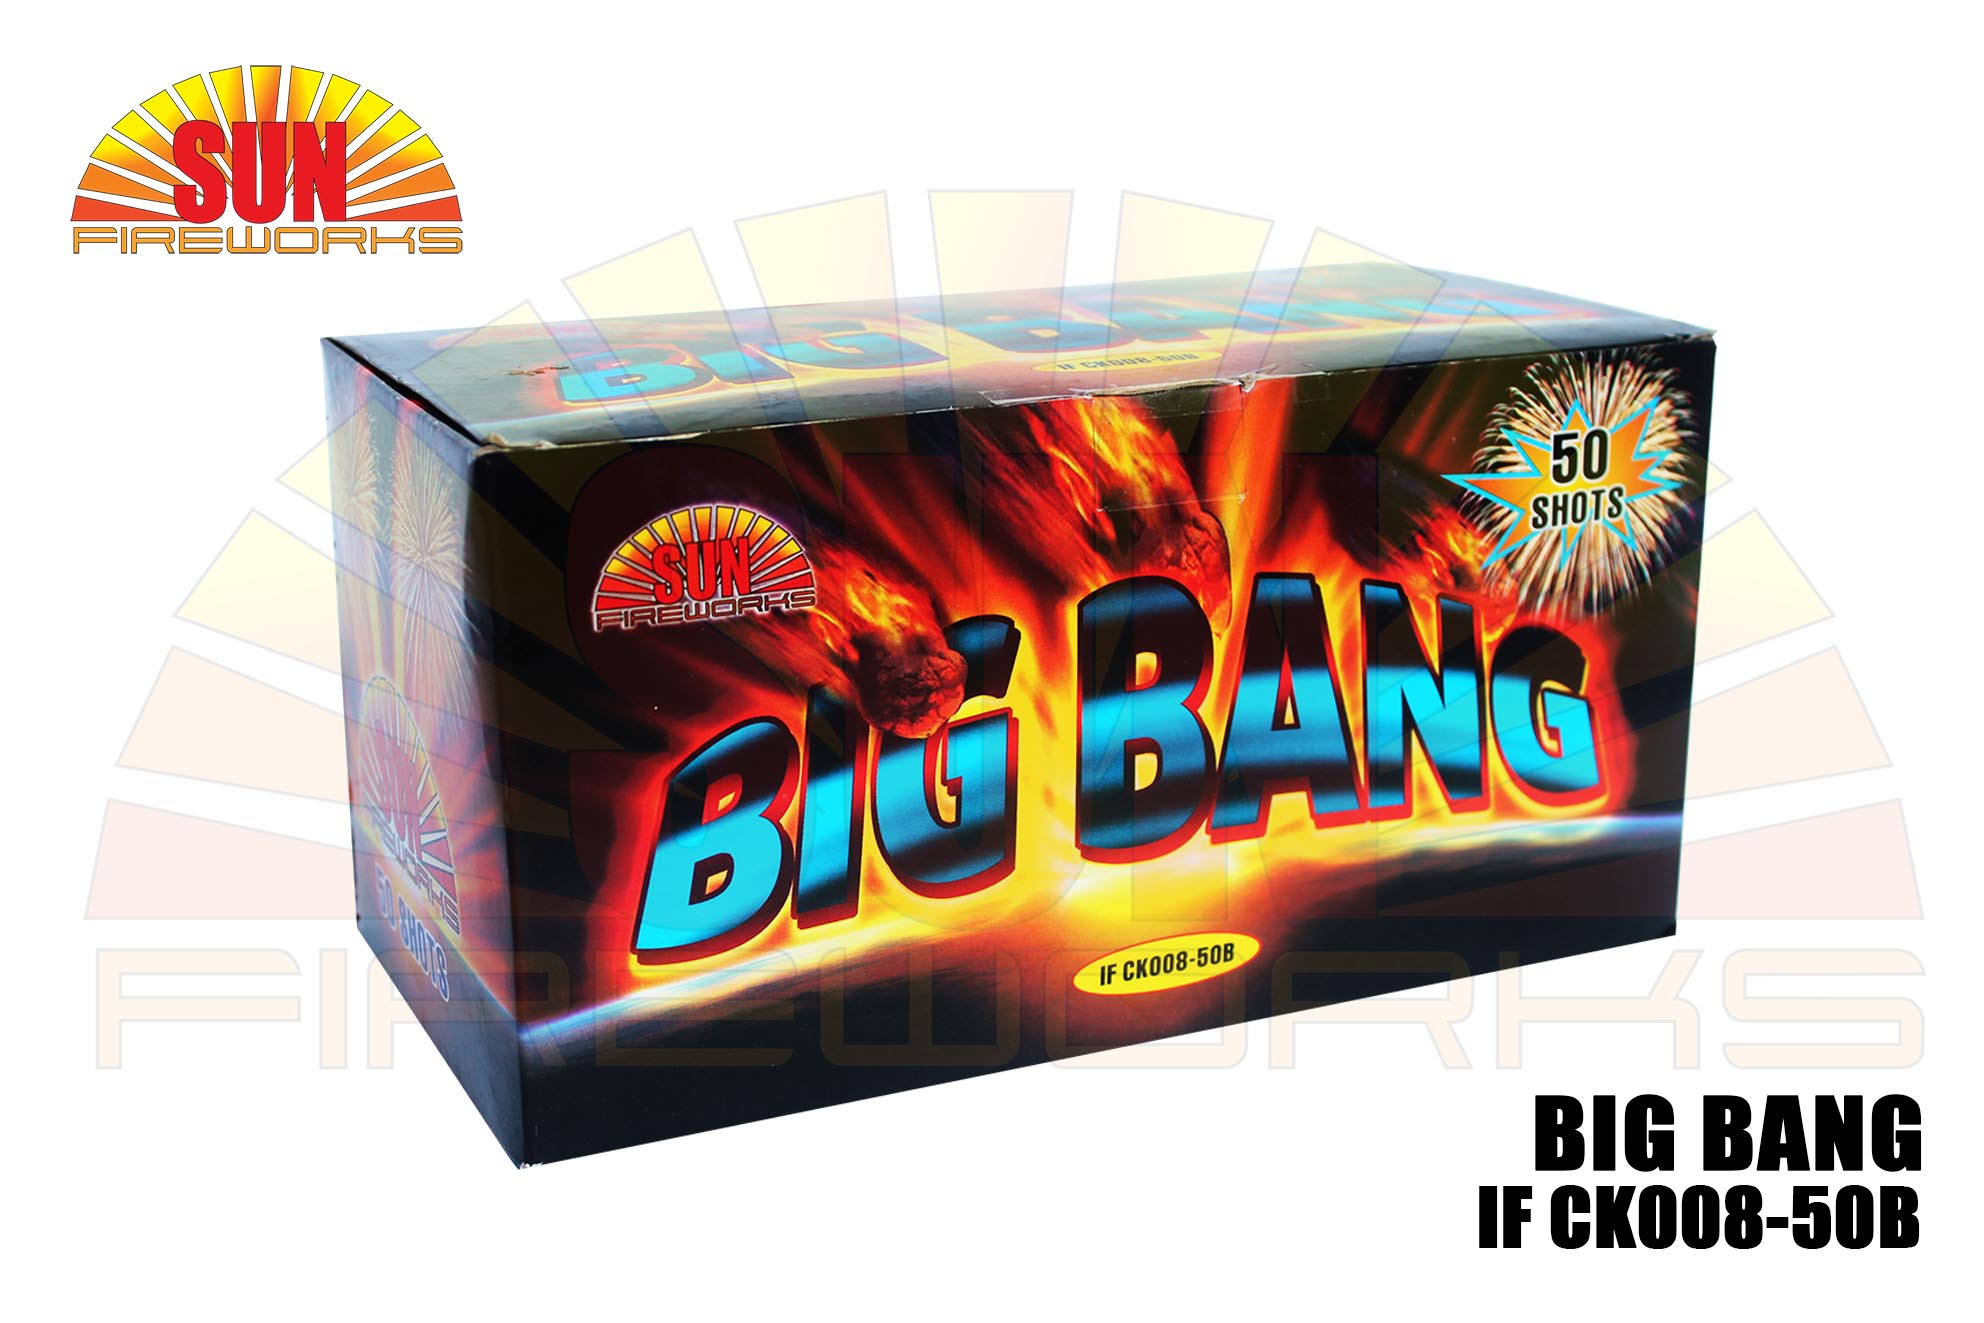 Big bang IF CK008-50B